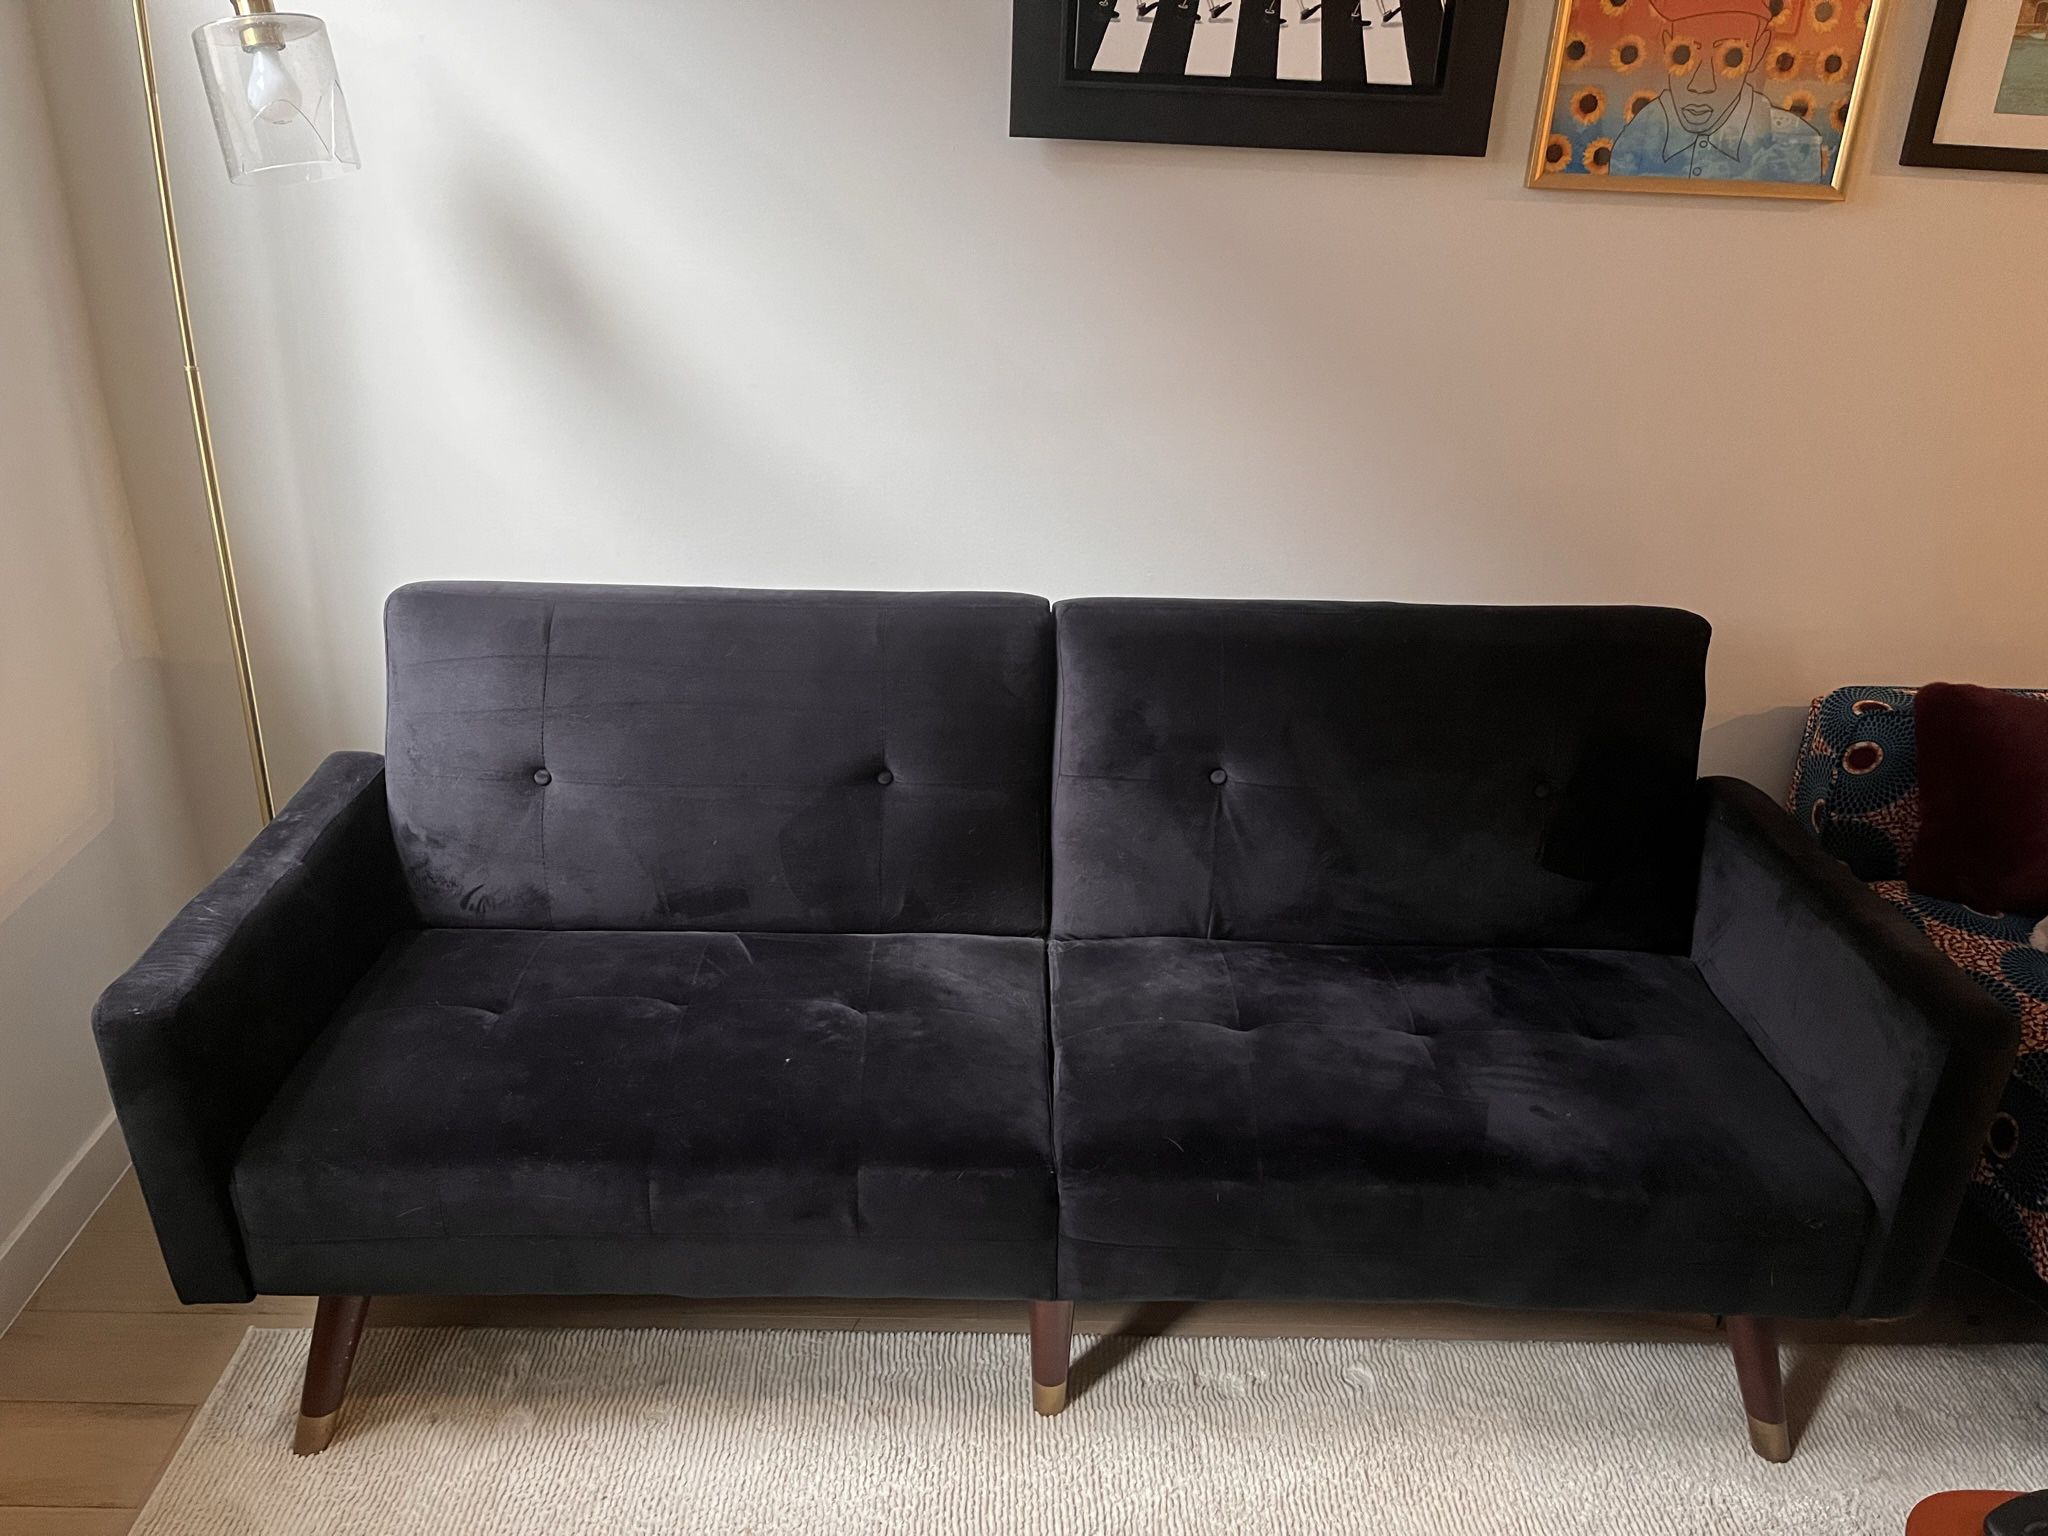 Black Sleeper Sofa